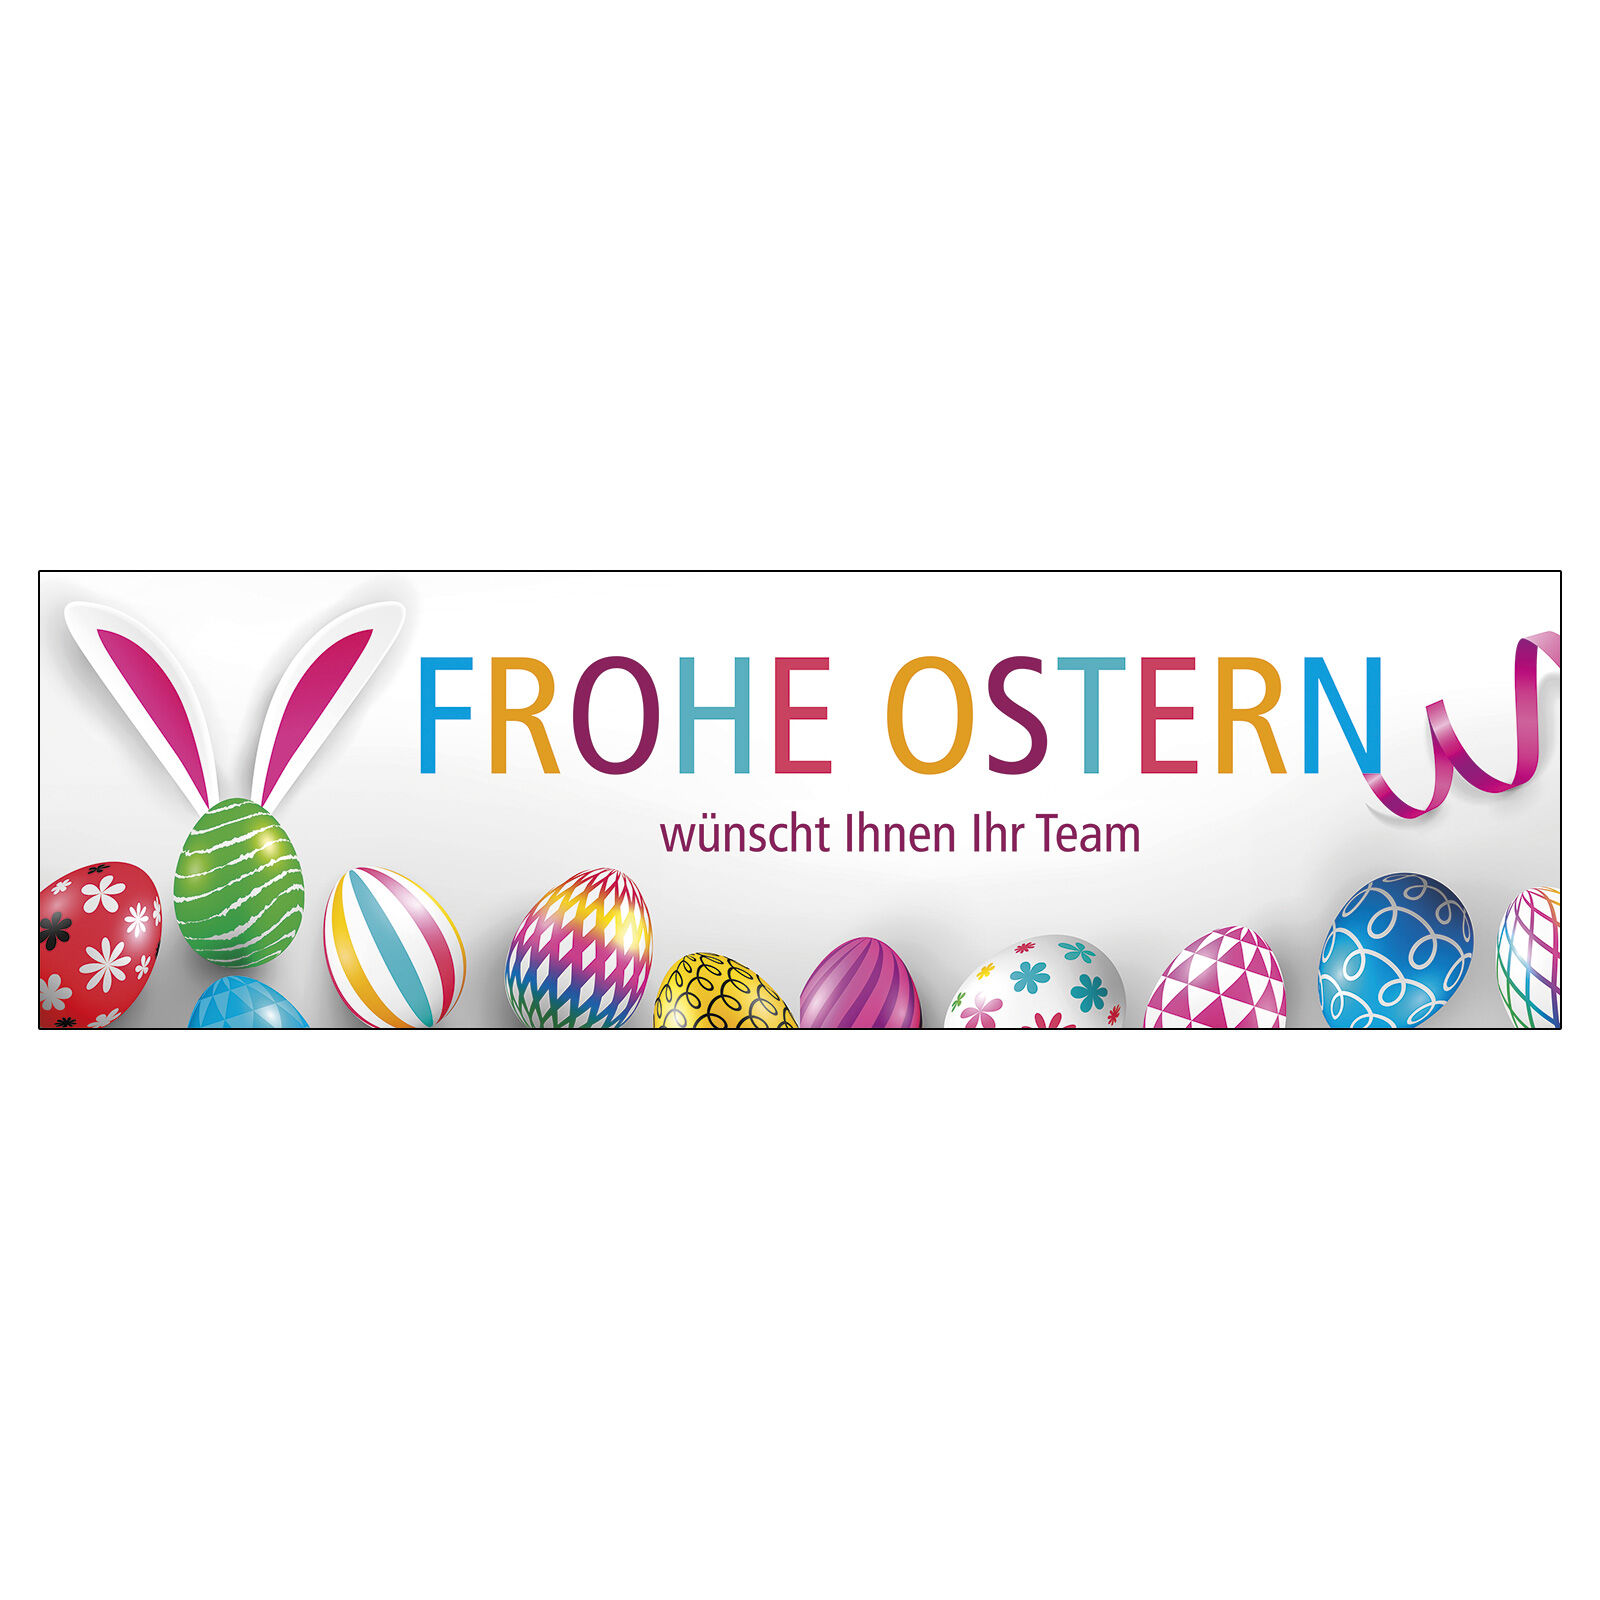 Papierplakat Frohe Ostern, 100x30 cm